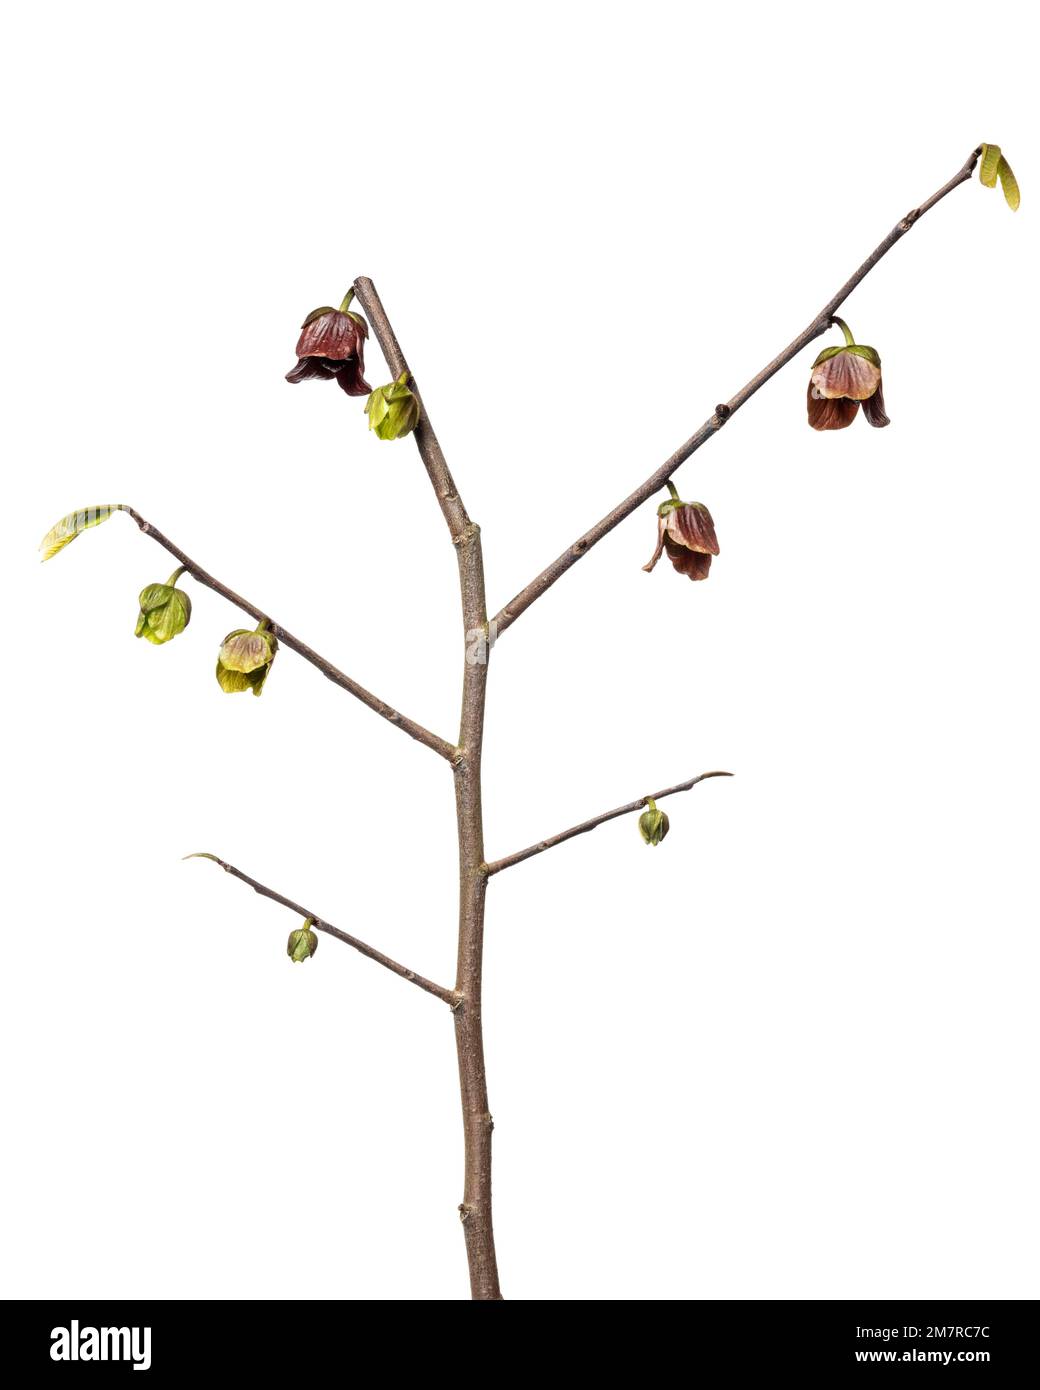 Paw-paw (Asimina triloba), Papau, planta leñosa, arbusto, aislado, fondo blanco Foto de stock